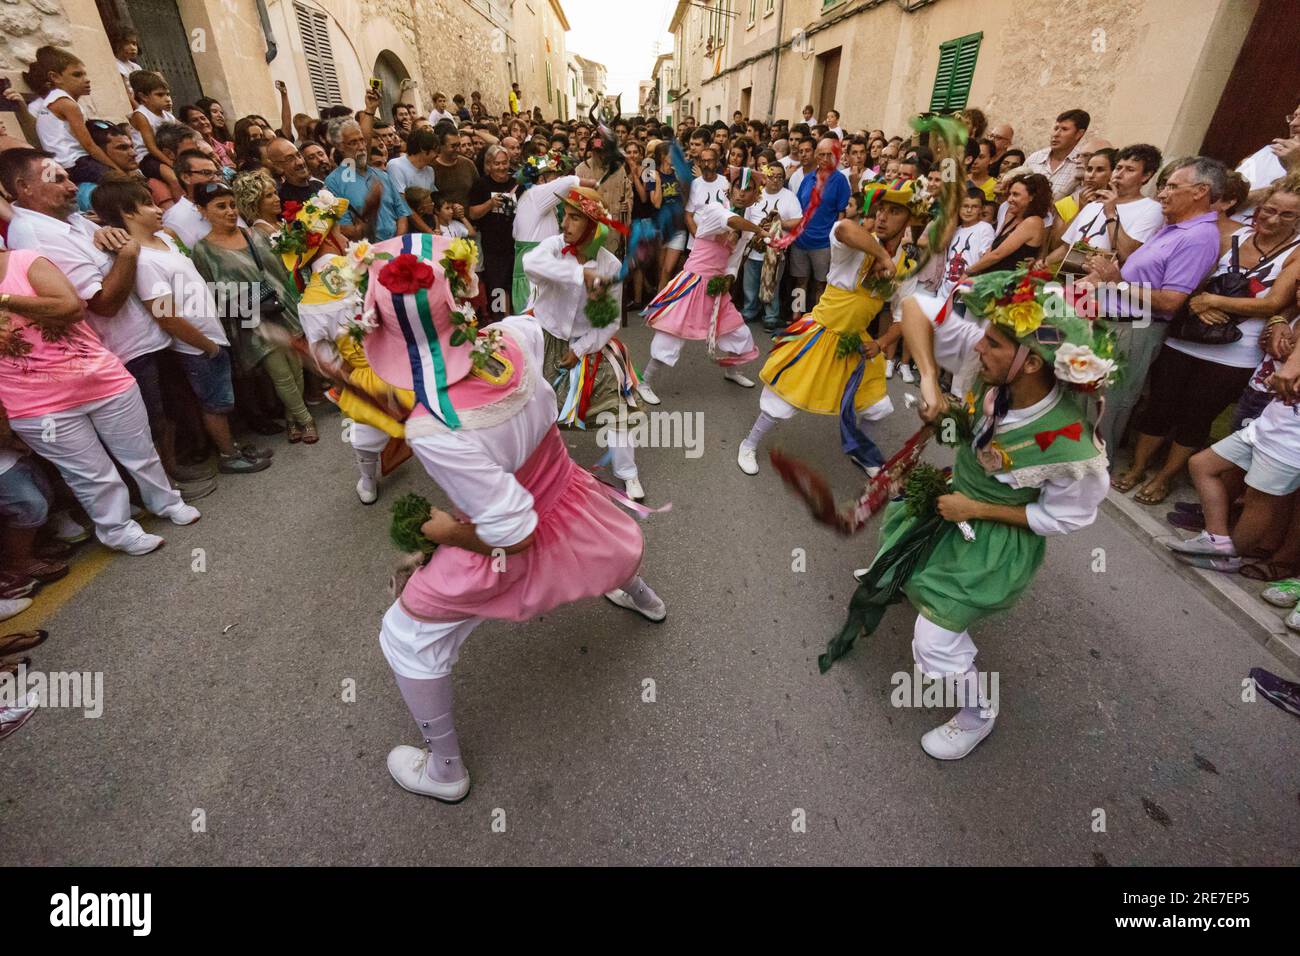 Cossiers de Montuïri, grupo de danzadores,Montuïri, islas baleares, Spain Stock Photo